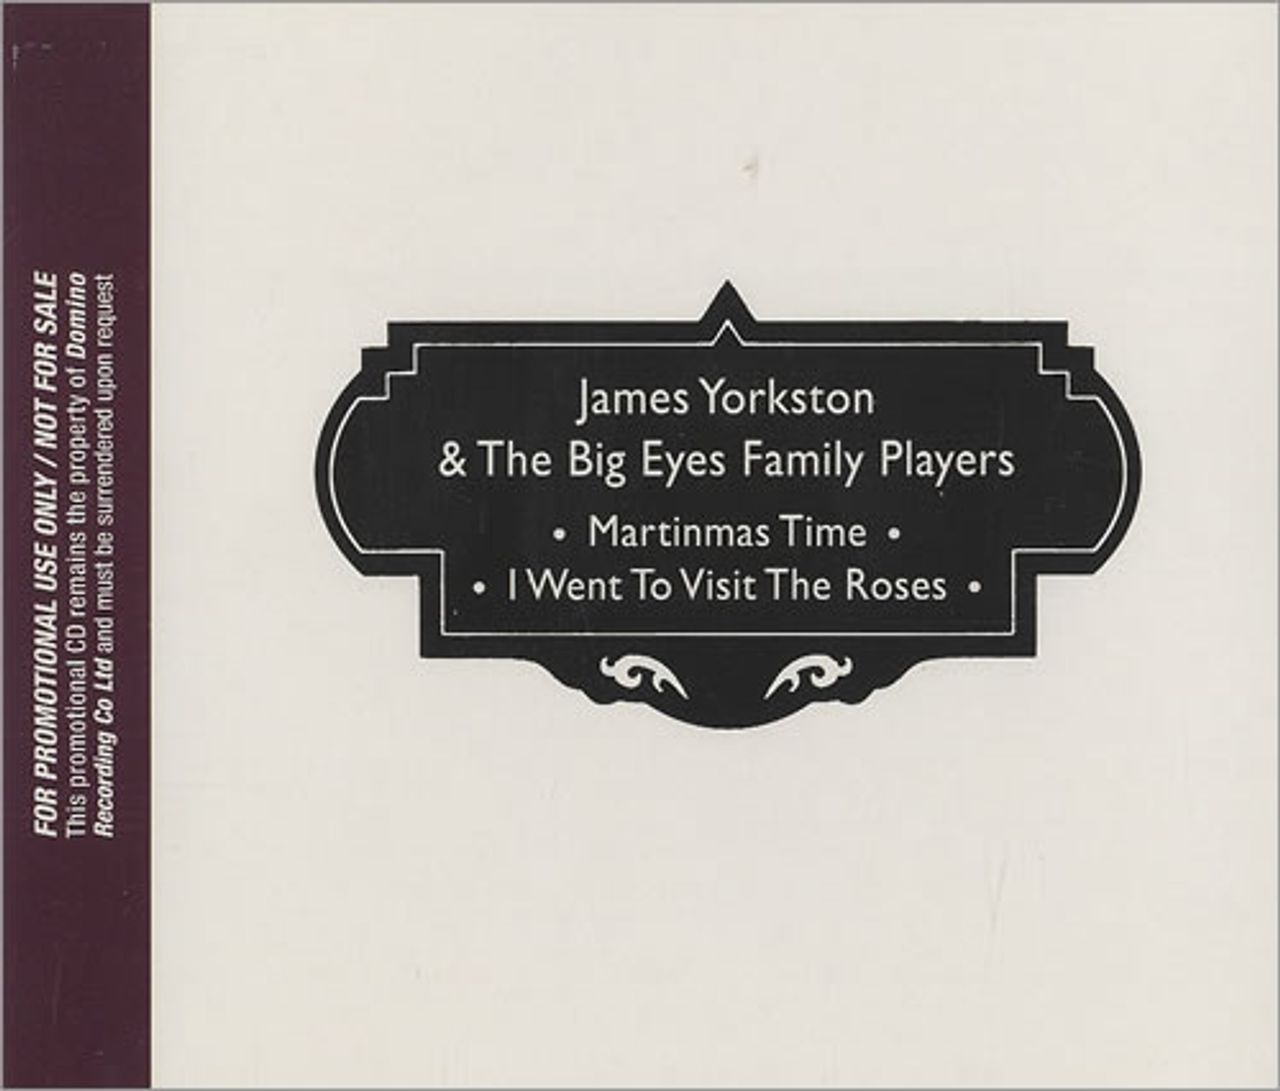 James Yorkston Martinmas Time UK Promo CD single (CD5 / 5") RUG332CDP